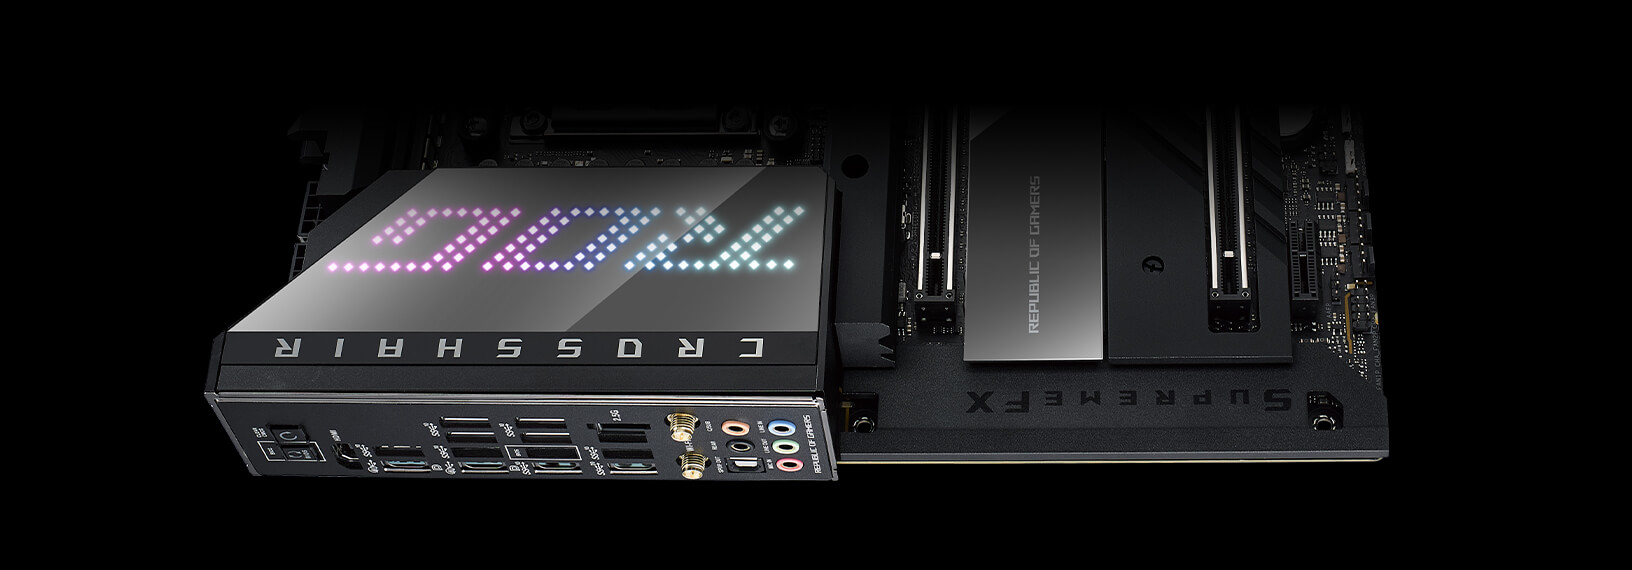 The ROG Crosshair X670E Hero motherboard features SupremeFX audio.